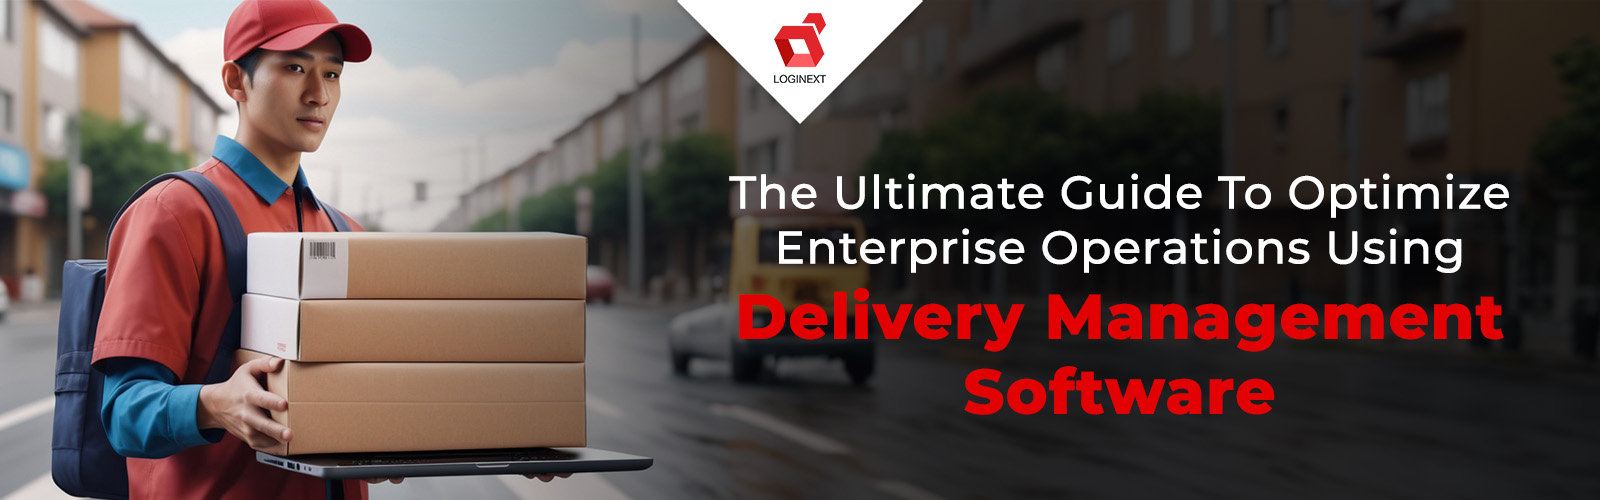 Ultimate Enterprise Guide For Delivery Management Software